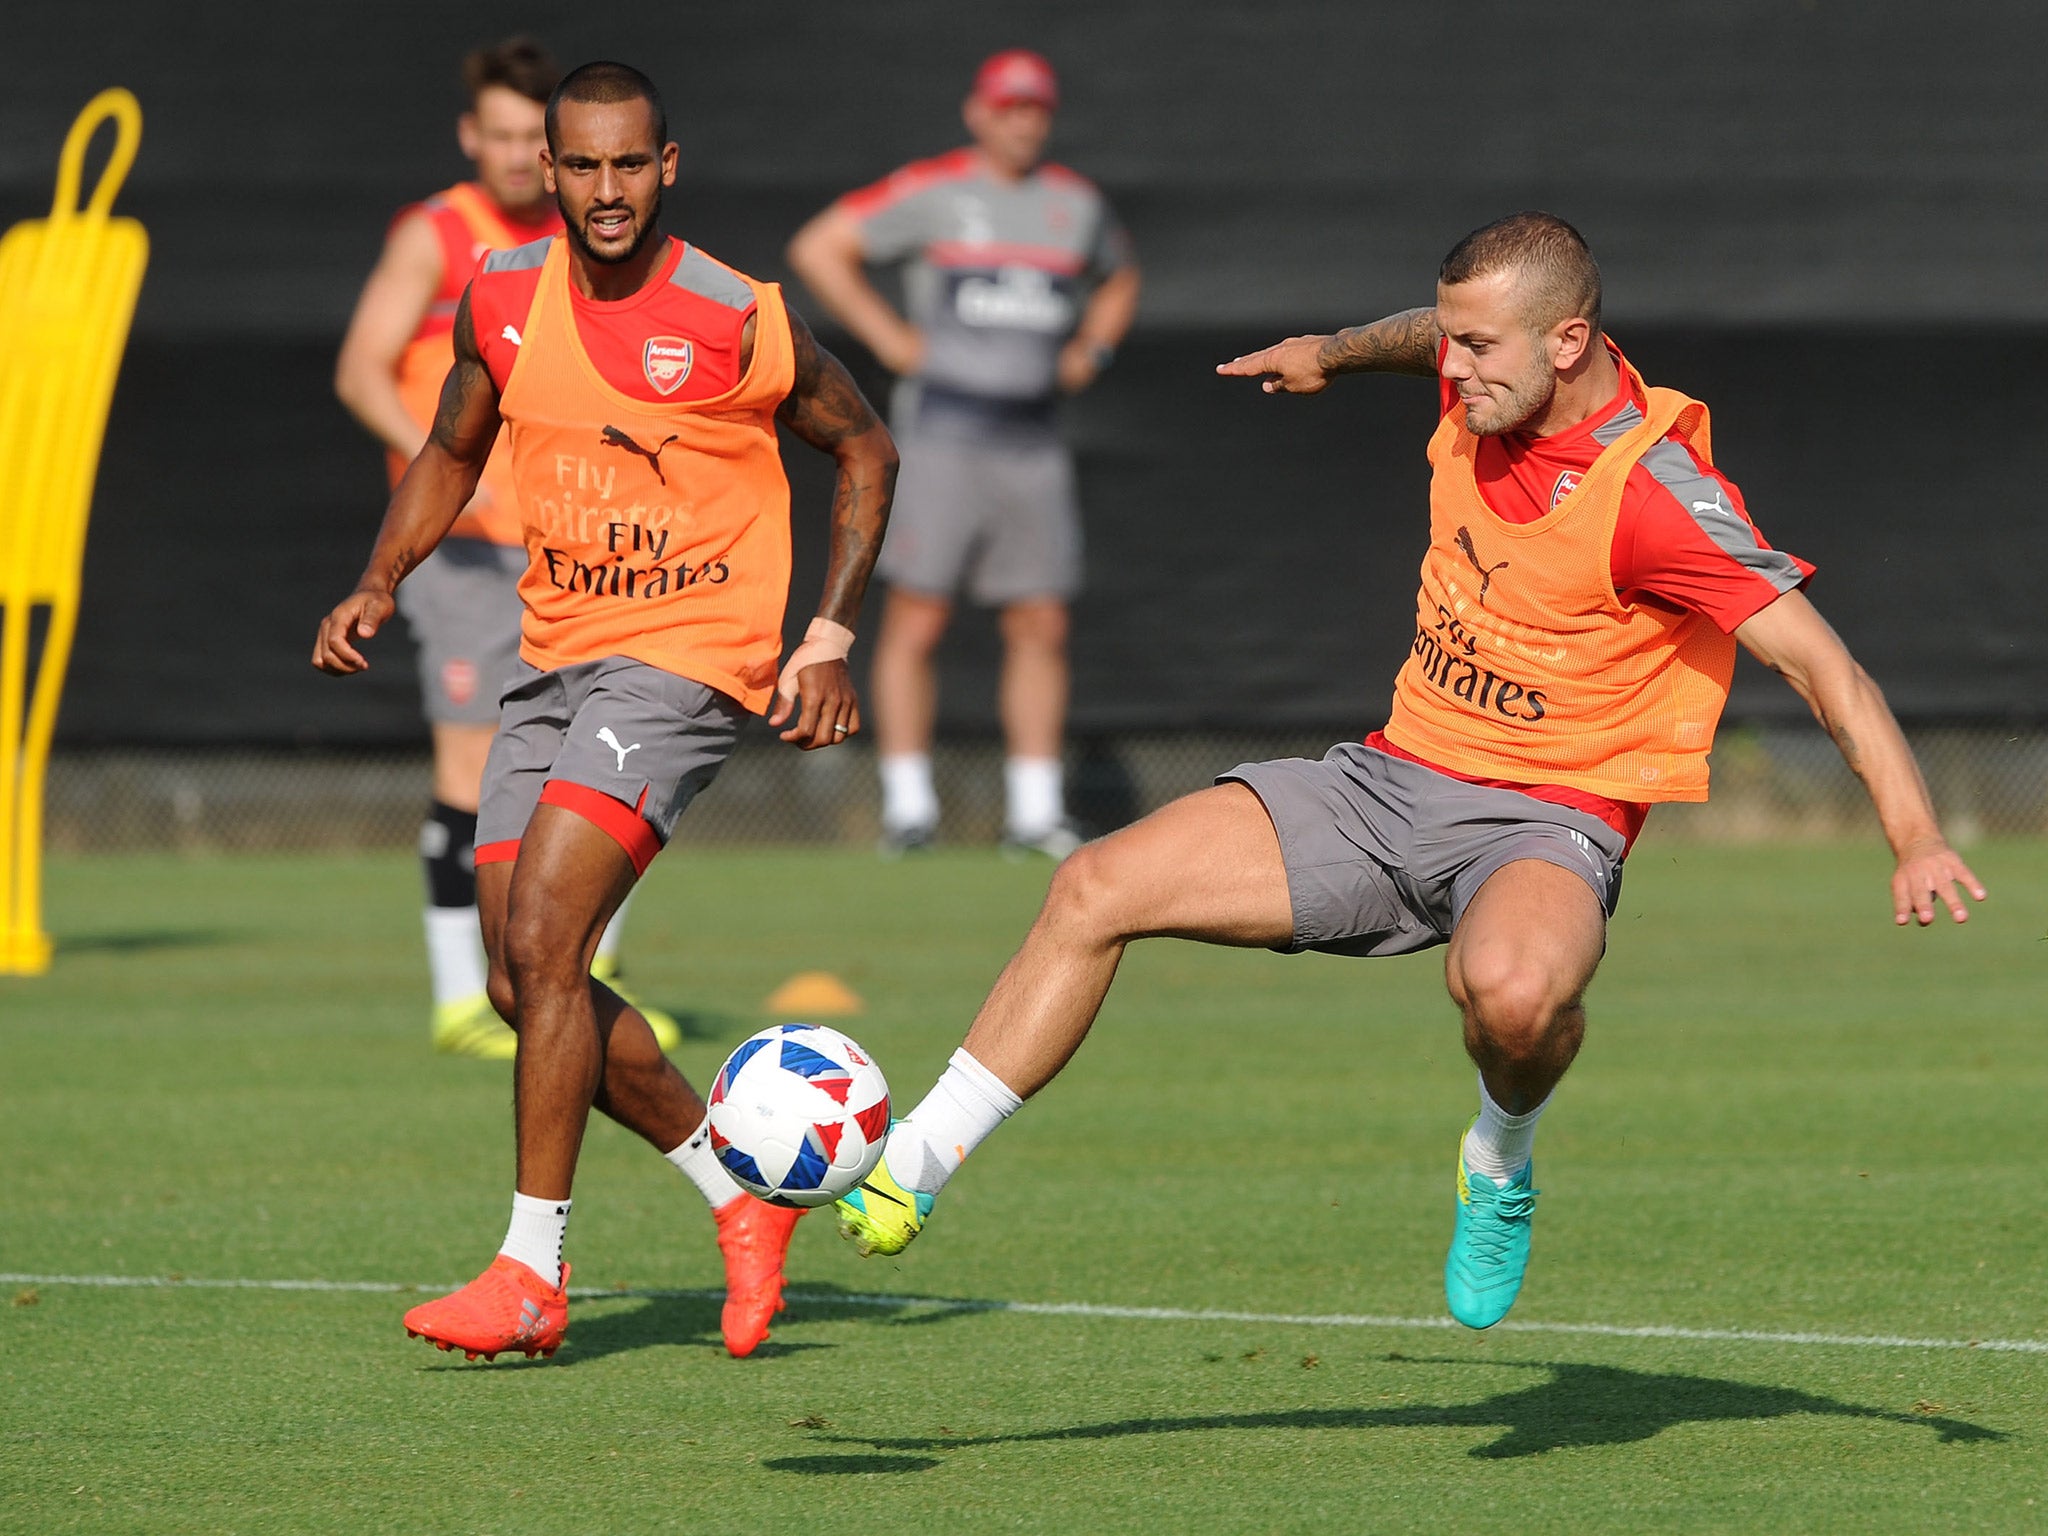 Jack Wilshere trains alongside Theo Walcott during Arsenal's tour of the United States